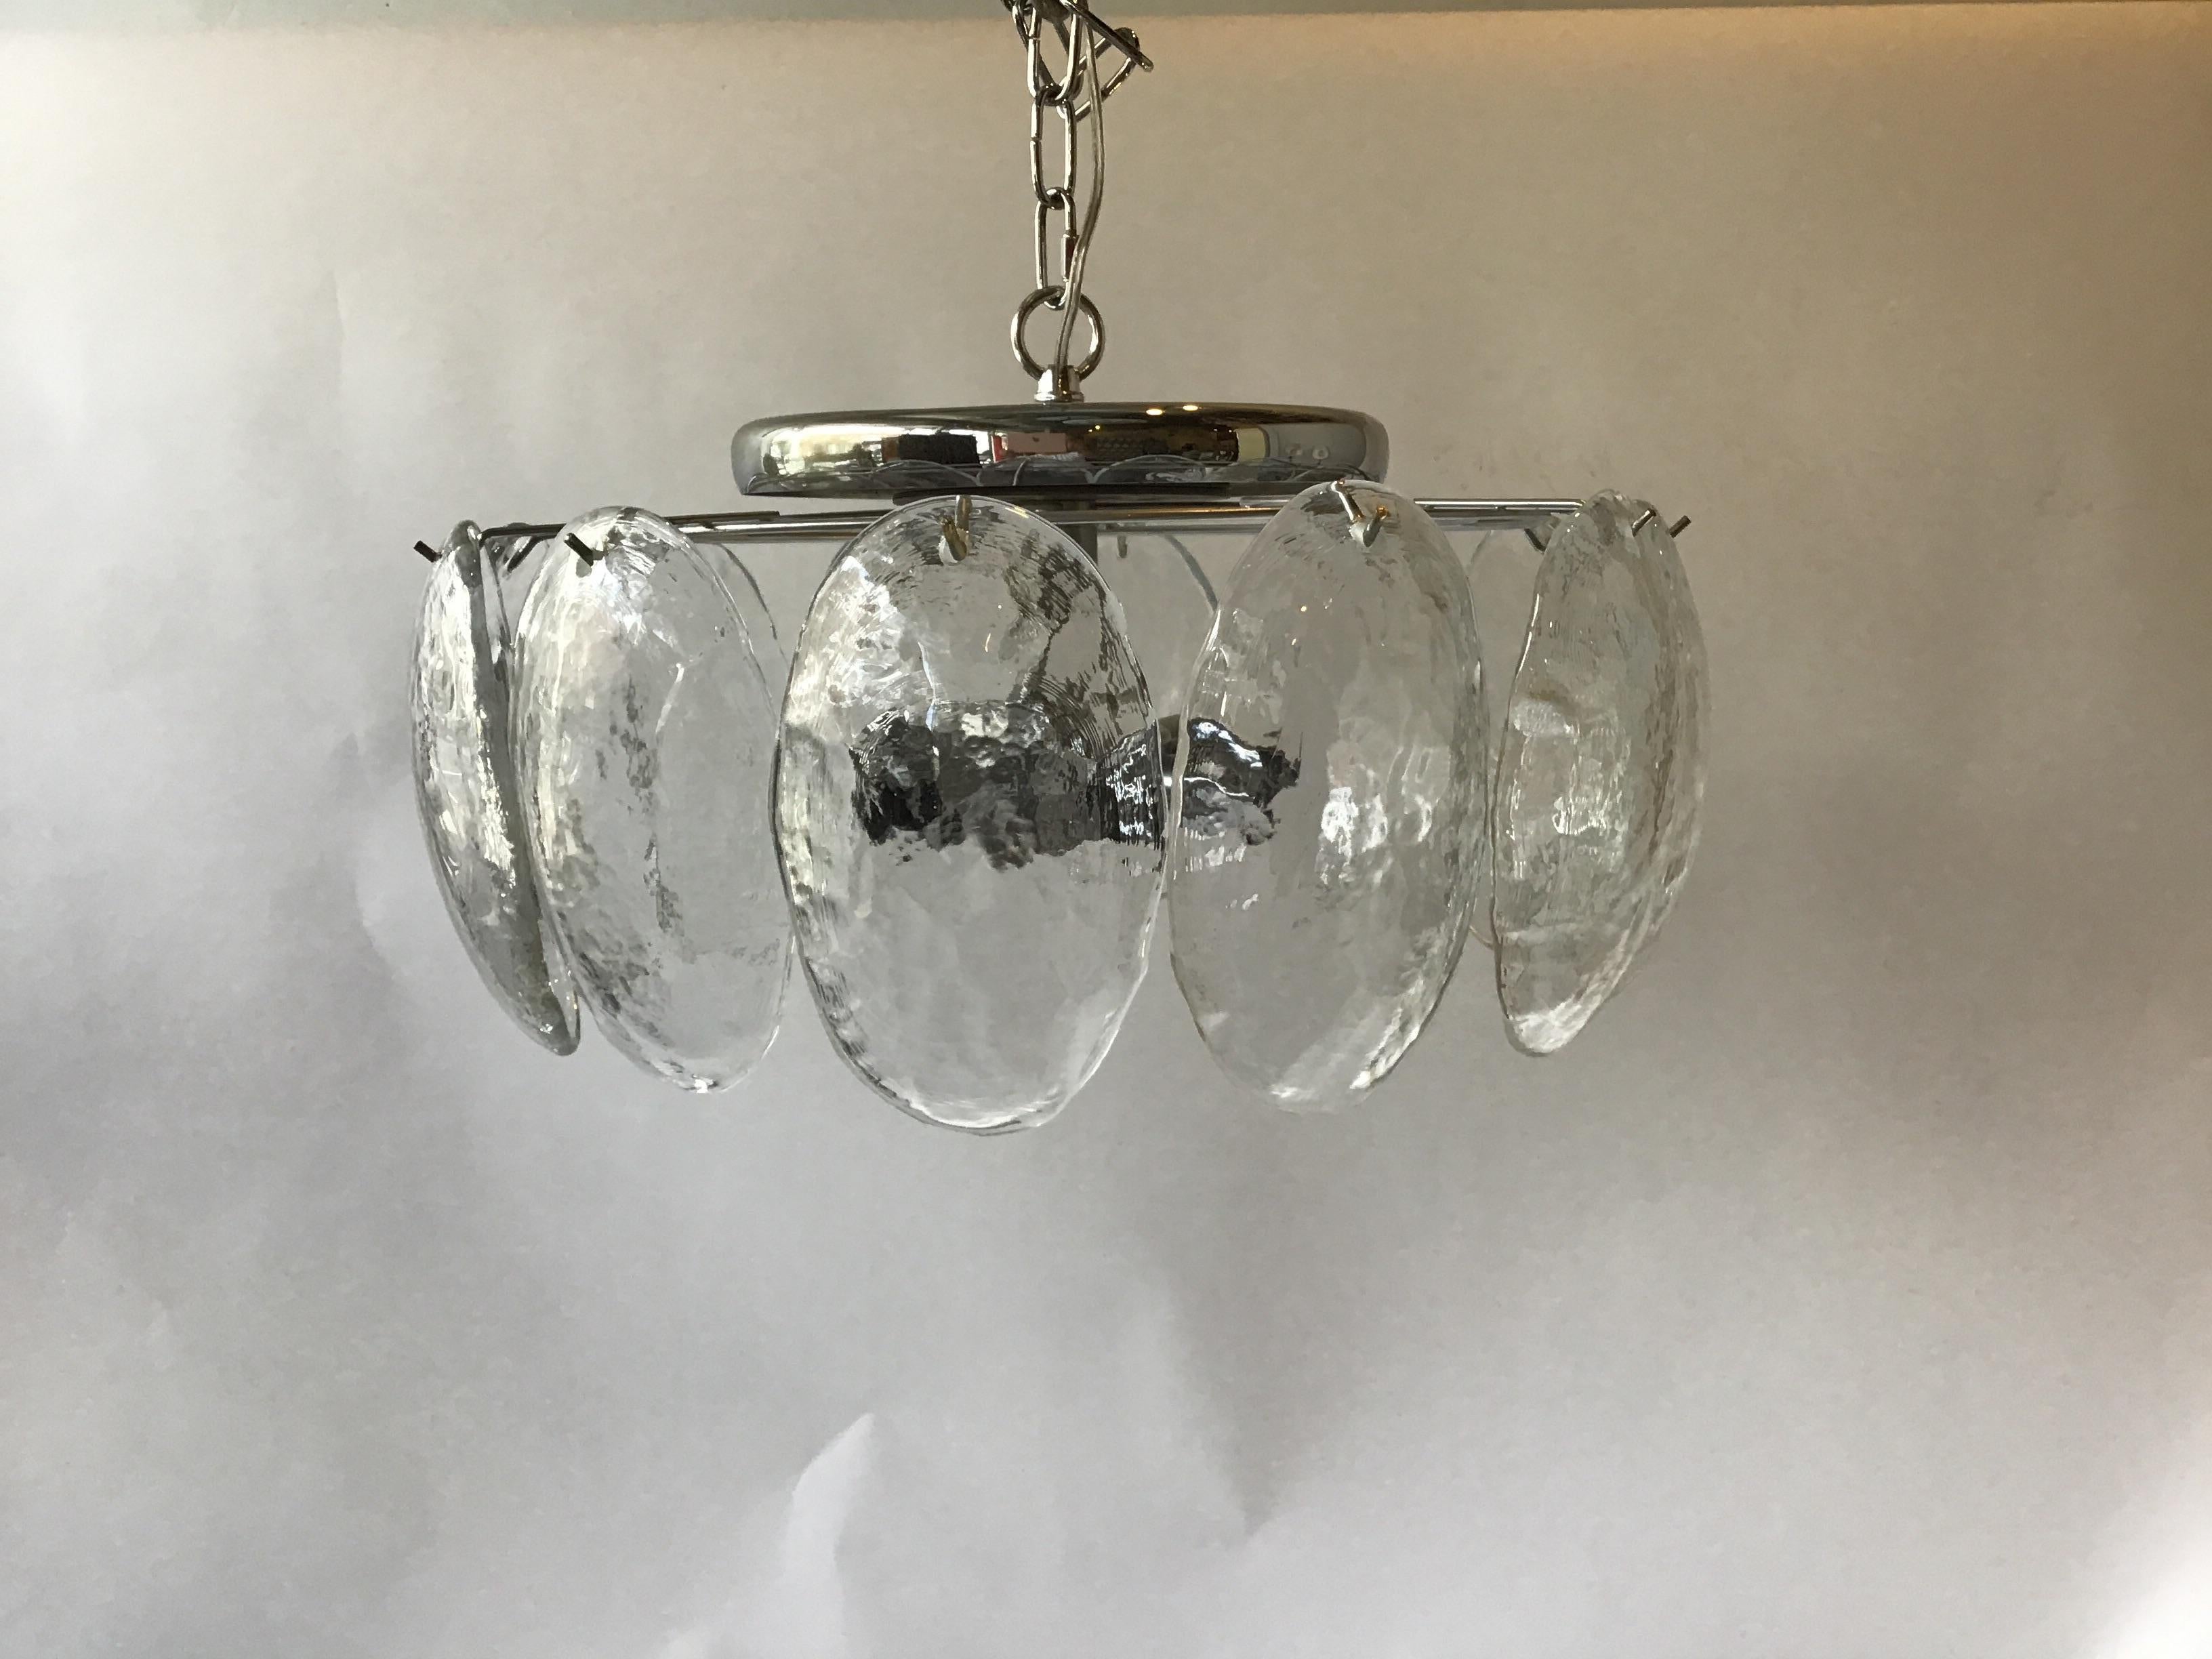 1970s Mazzega glass and chrome chandelier.
     